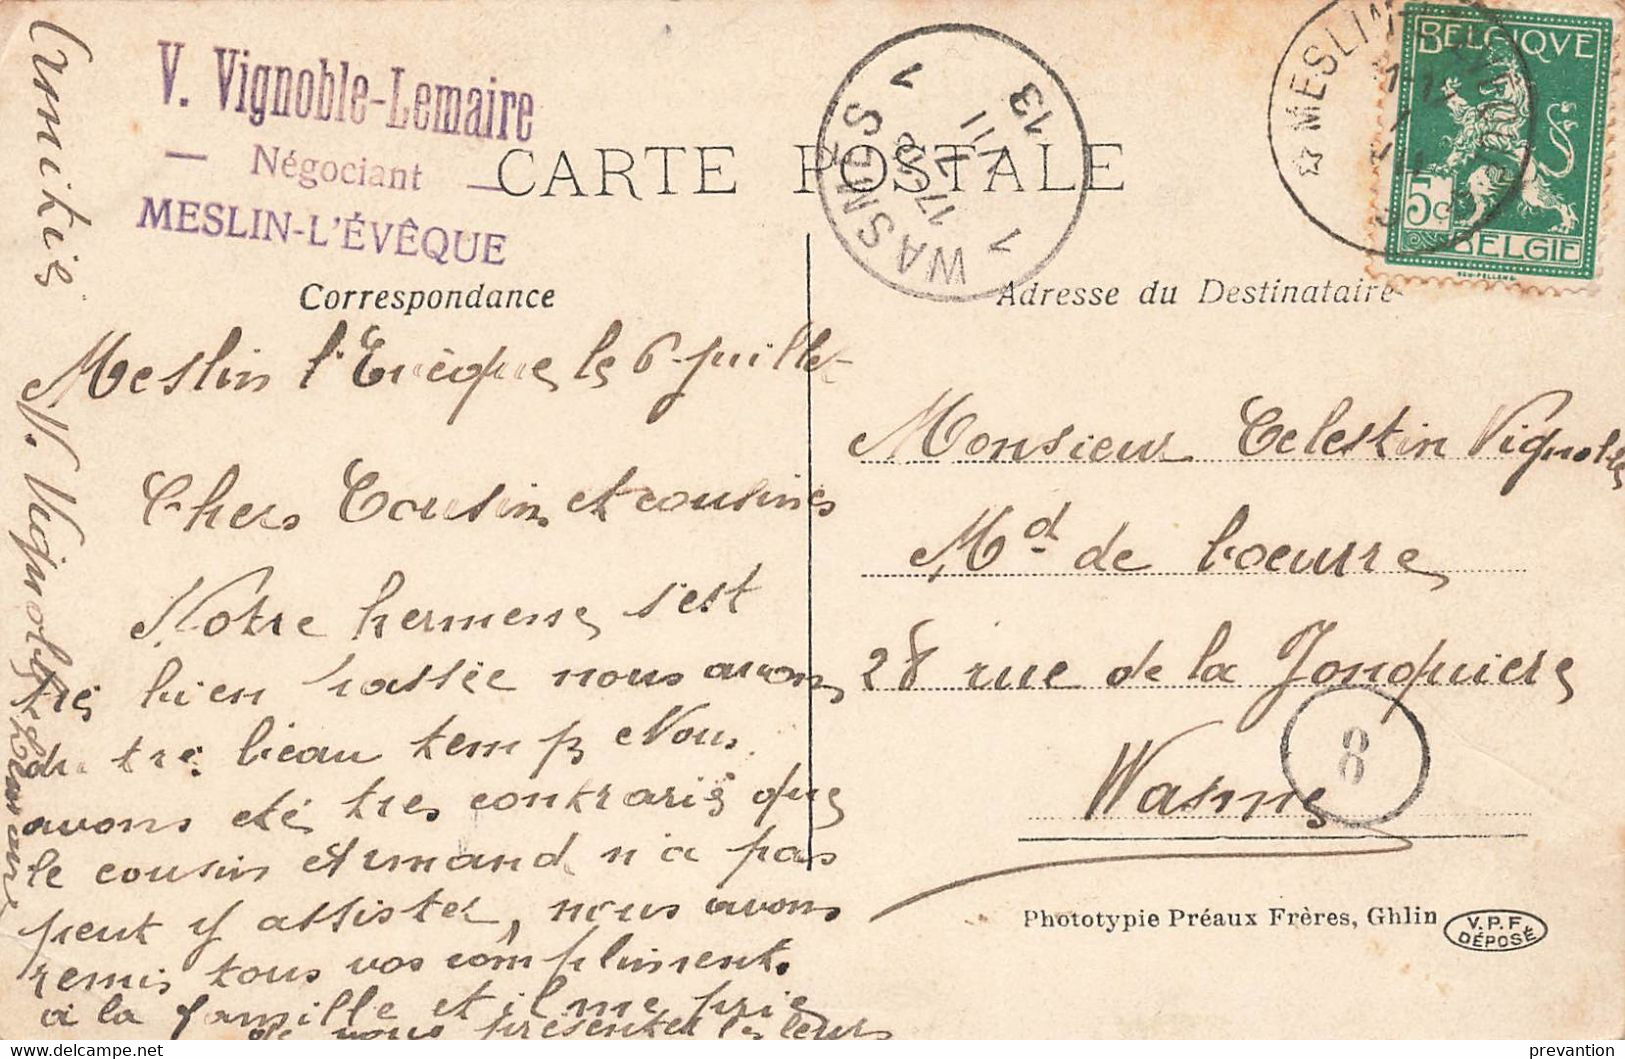 MESLIN-L'EVEQUE - Maison De Fénélon - Carte Circulé En 1913 - Cachet Vignoble-Lemaire - Ath